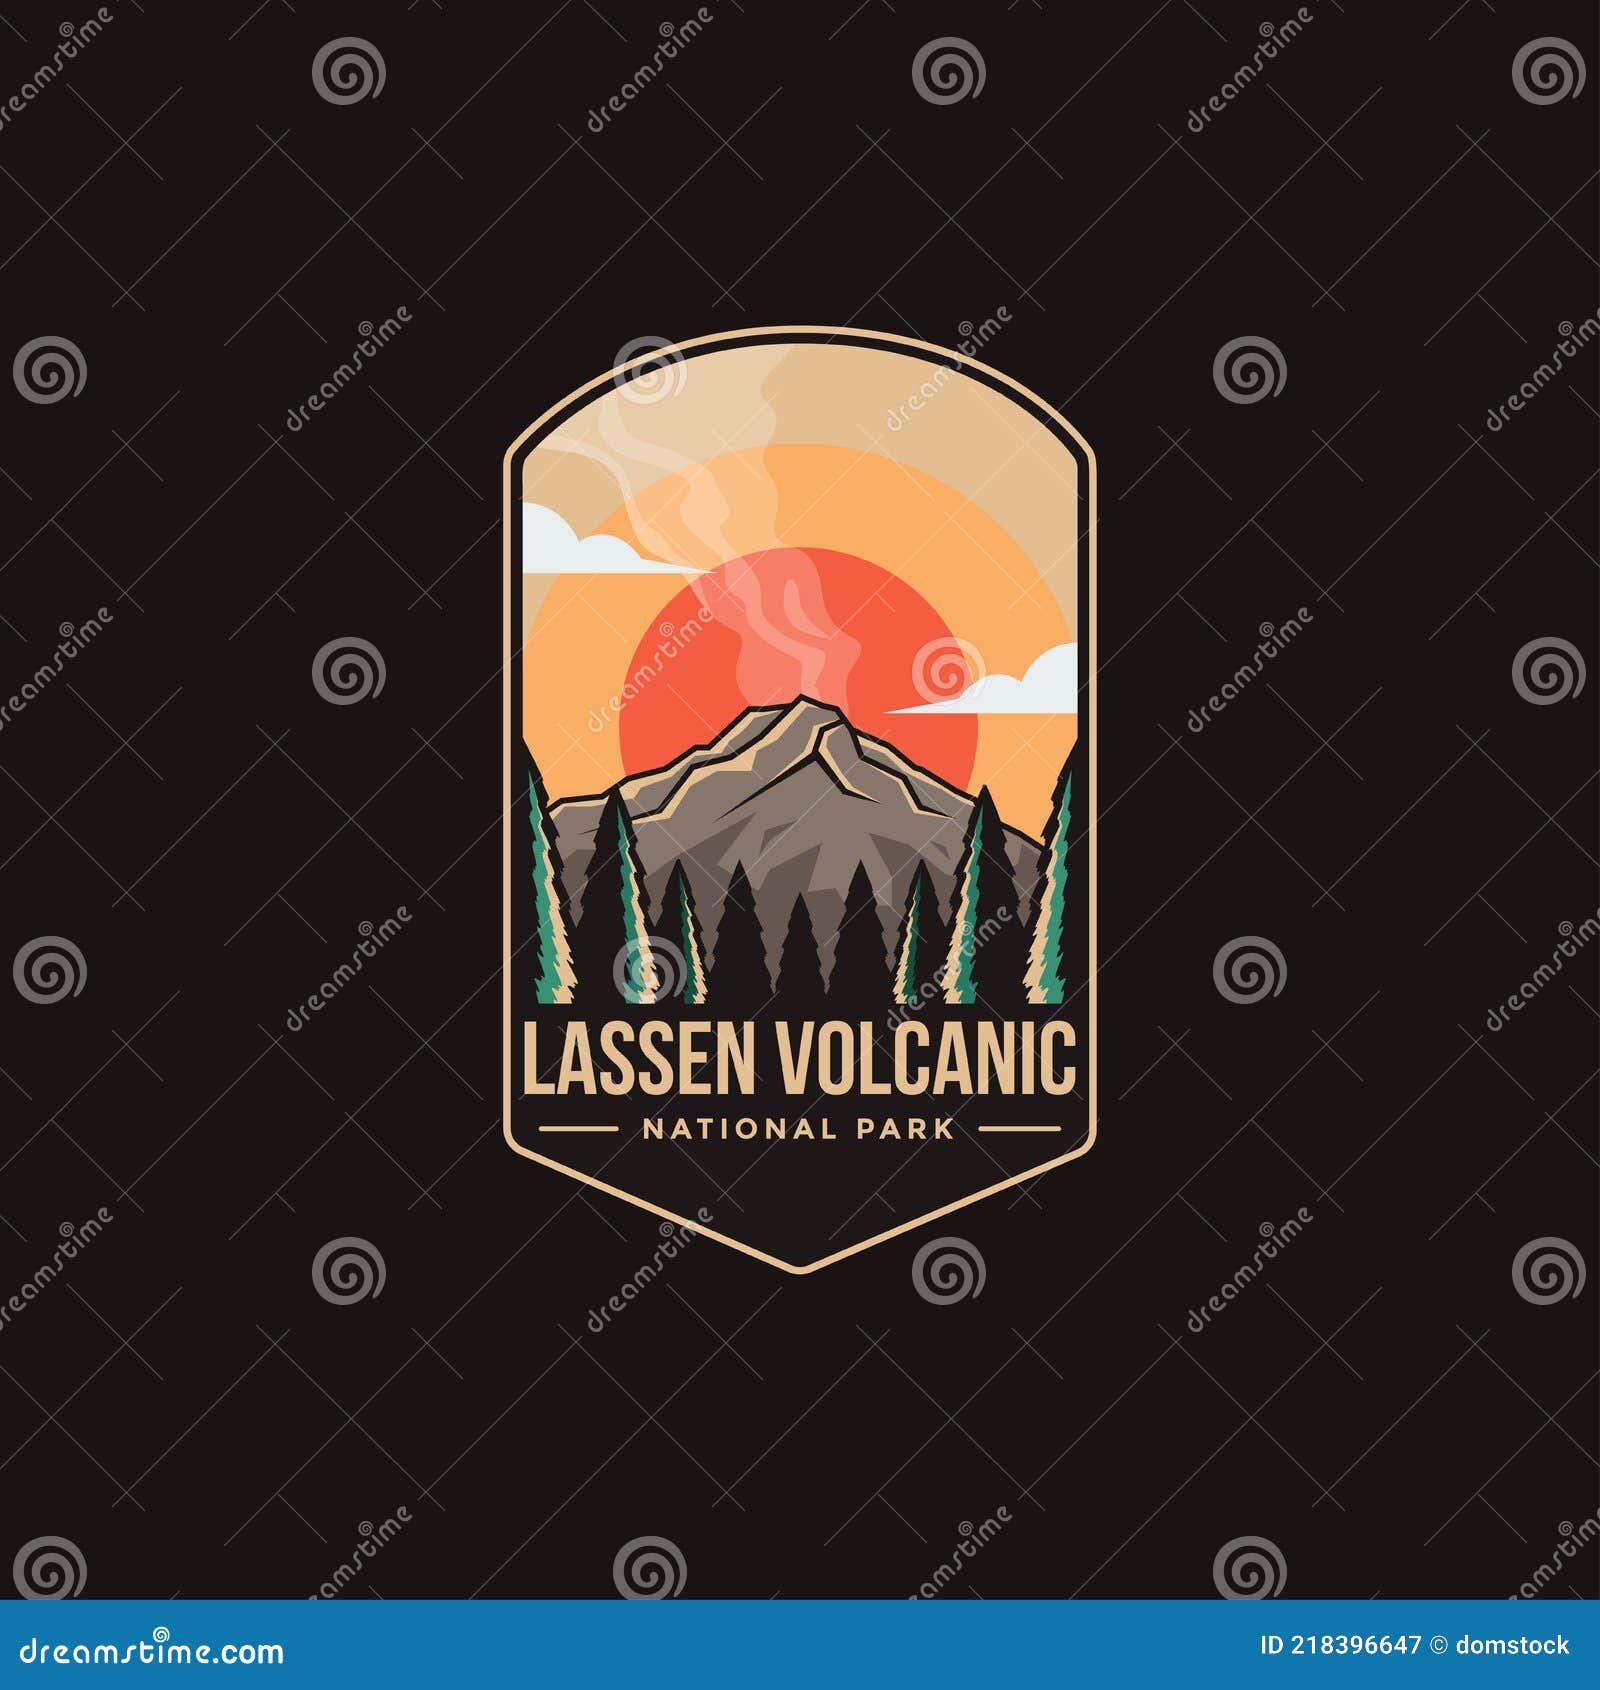 emblem patch logo  of lassen volcanic national park